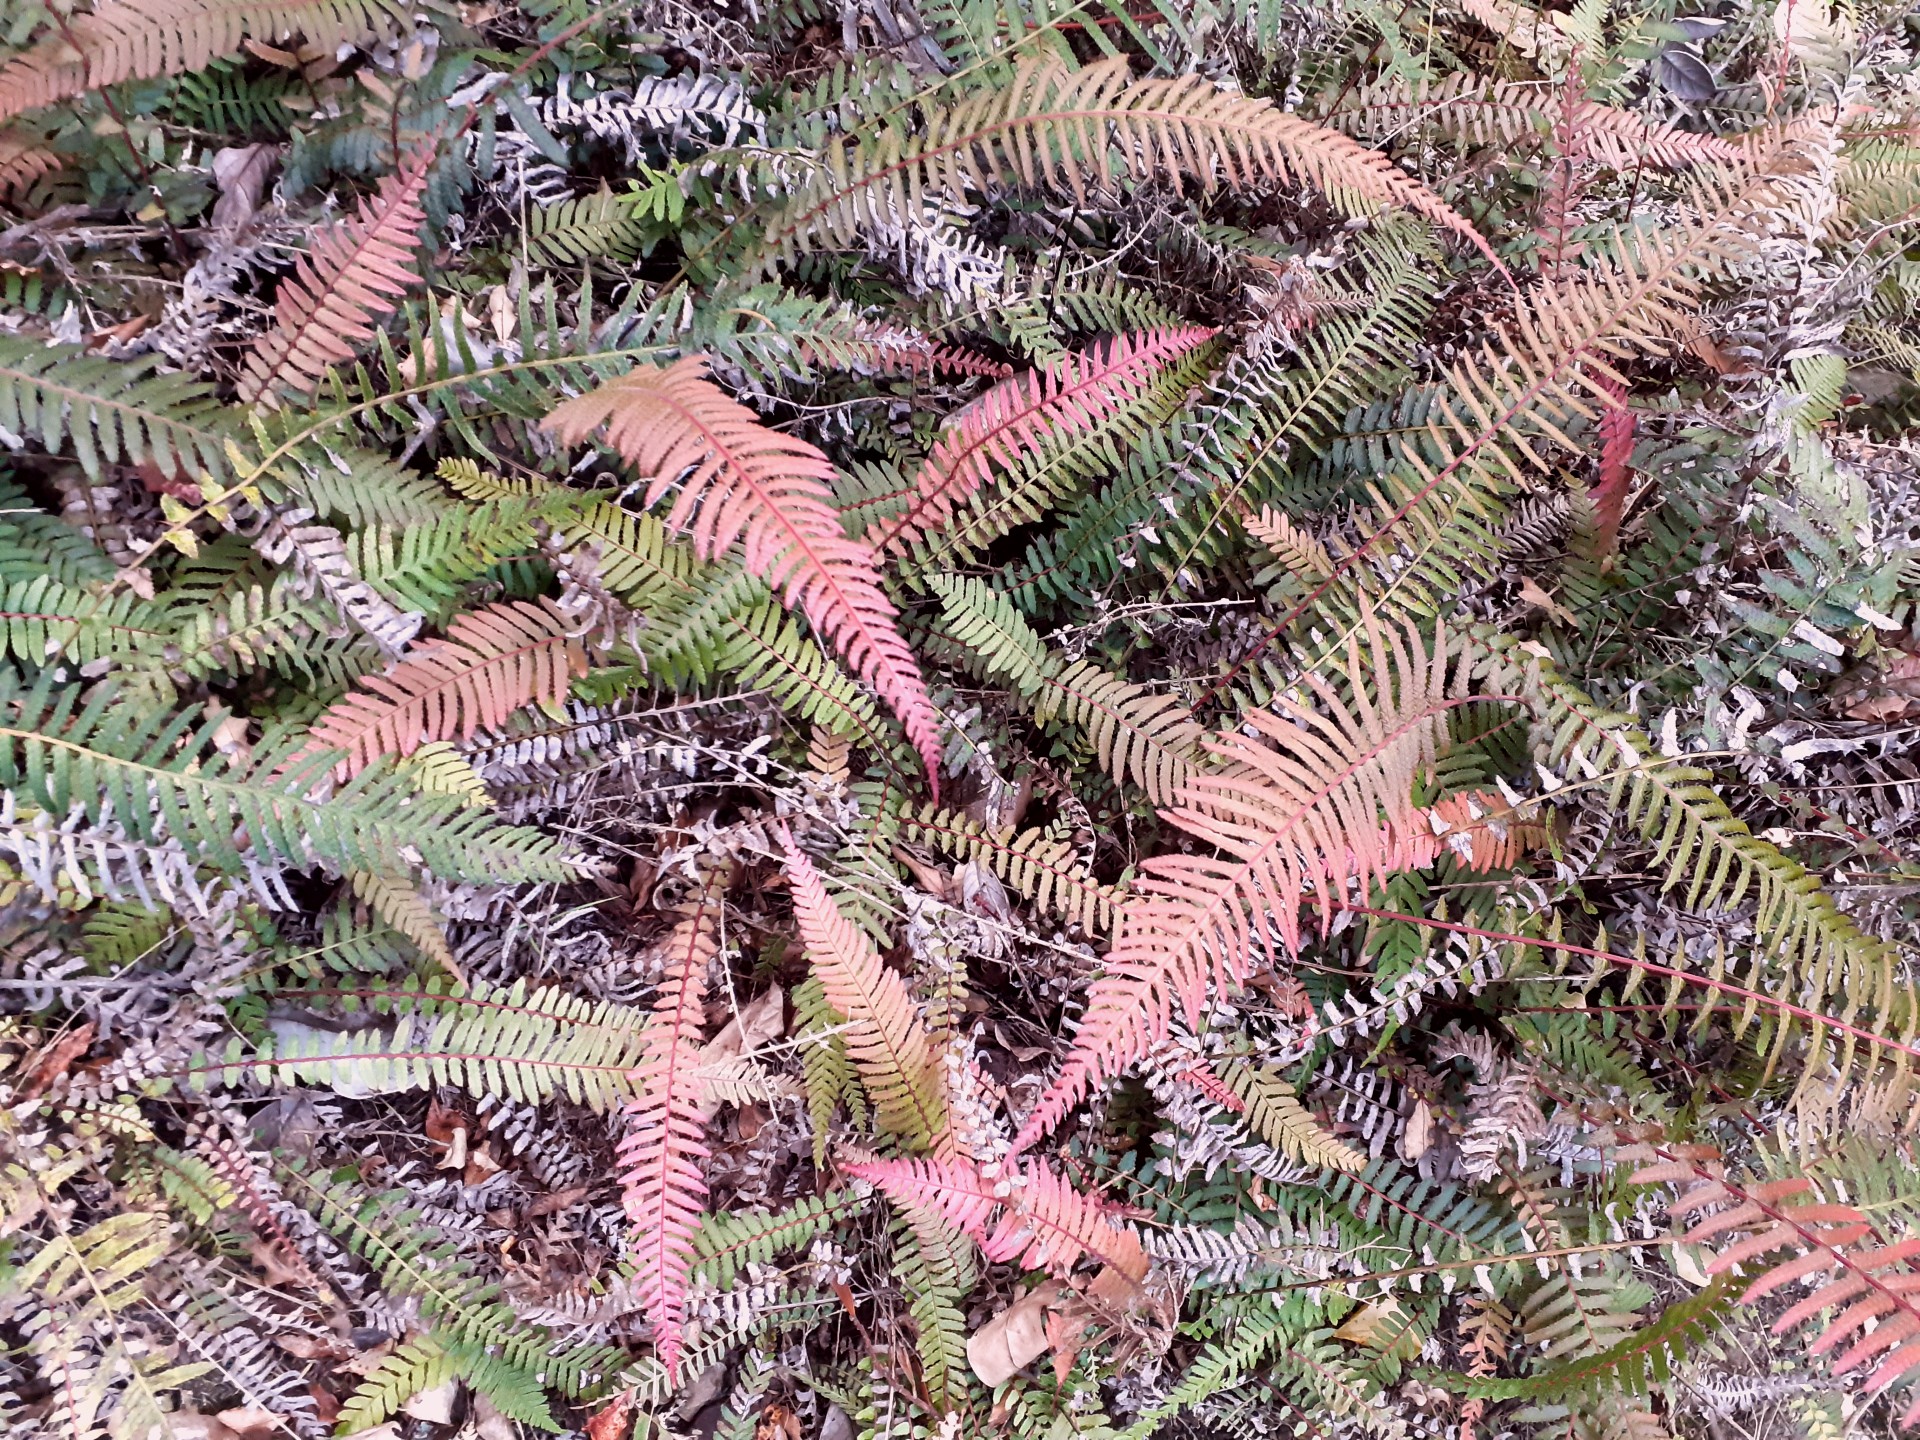 kiwi ferns of different shades